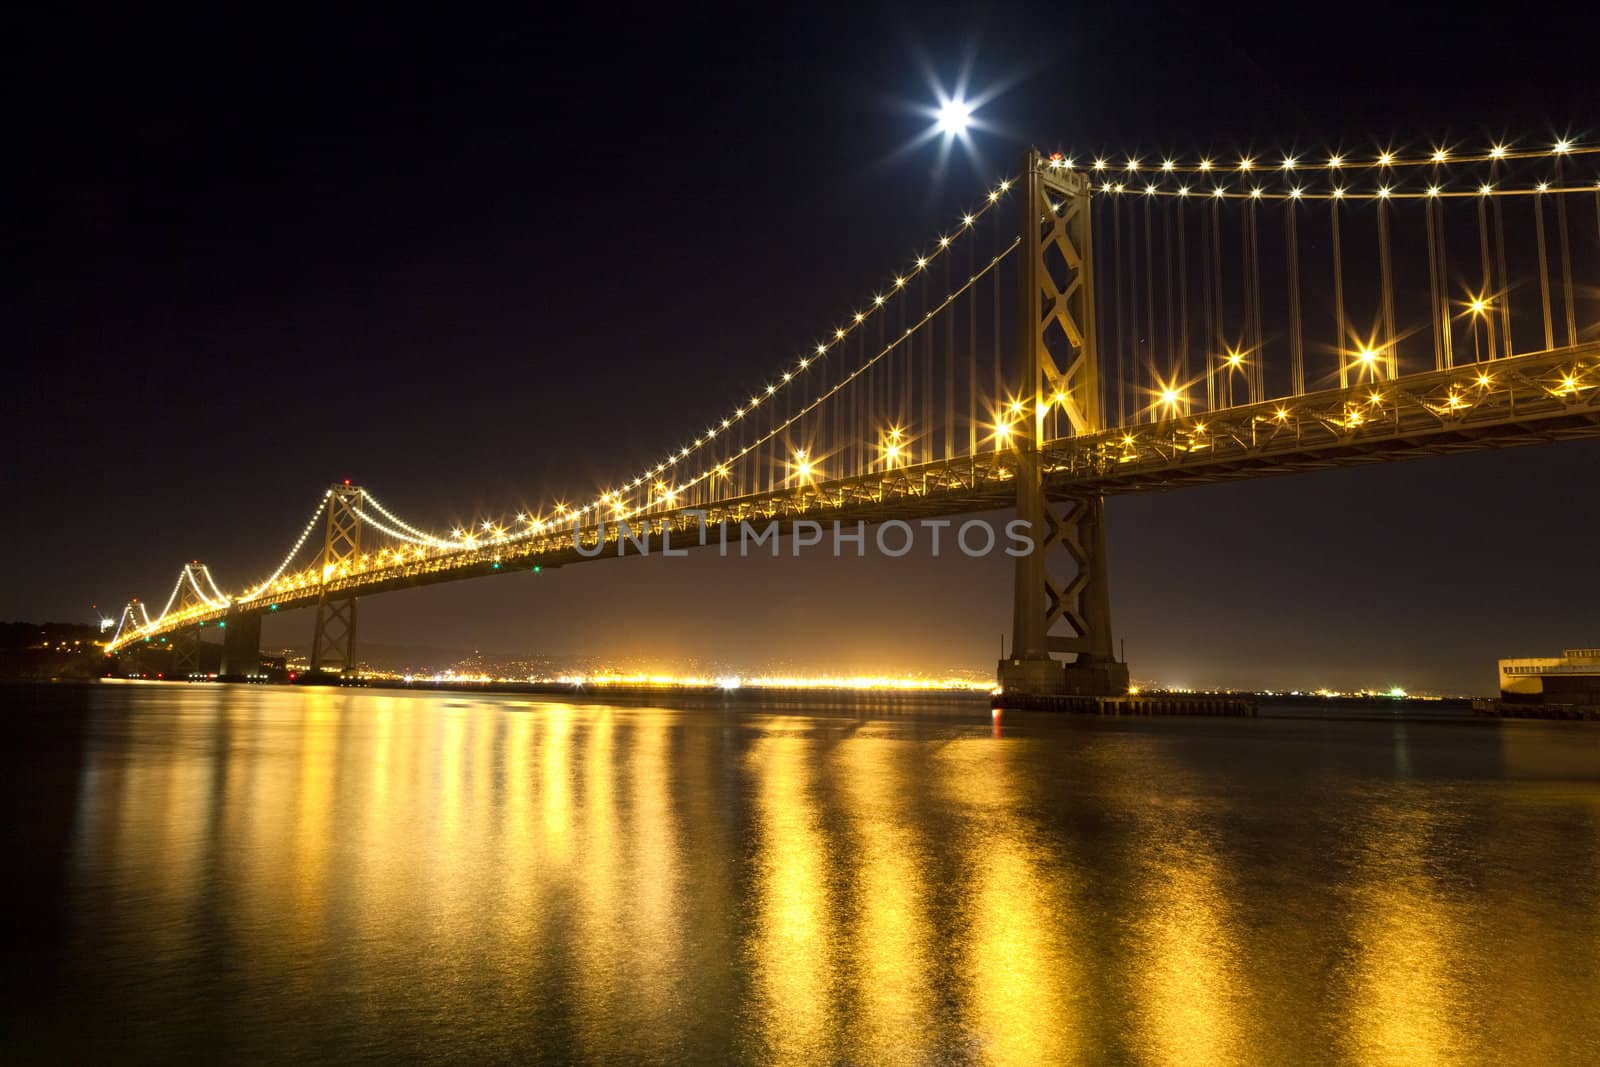 San Francisco Bay bridge in the night